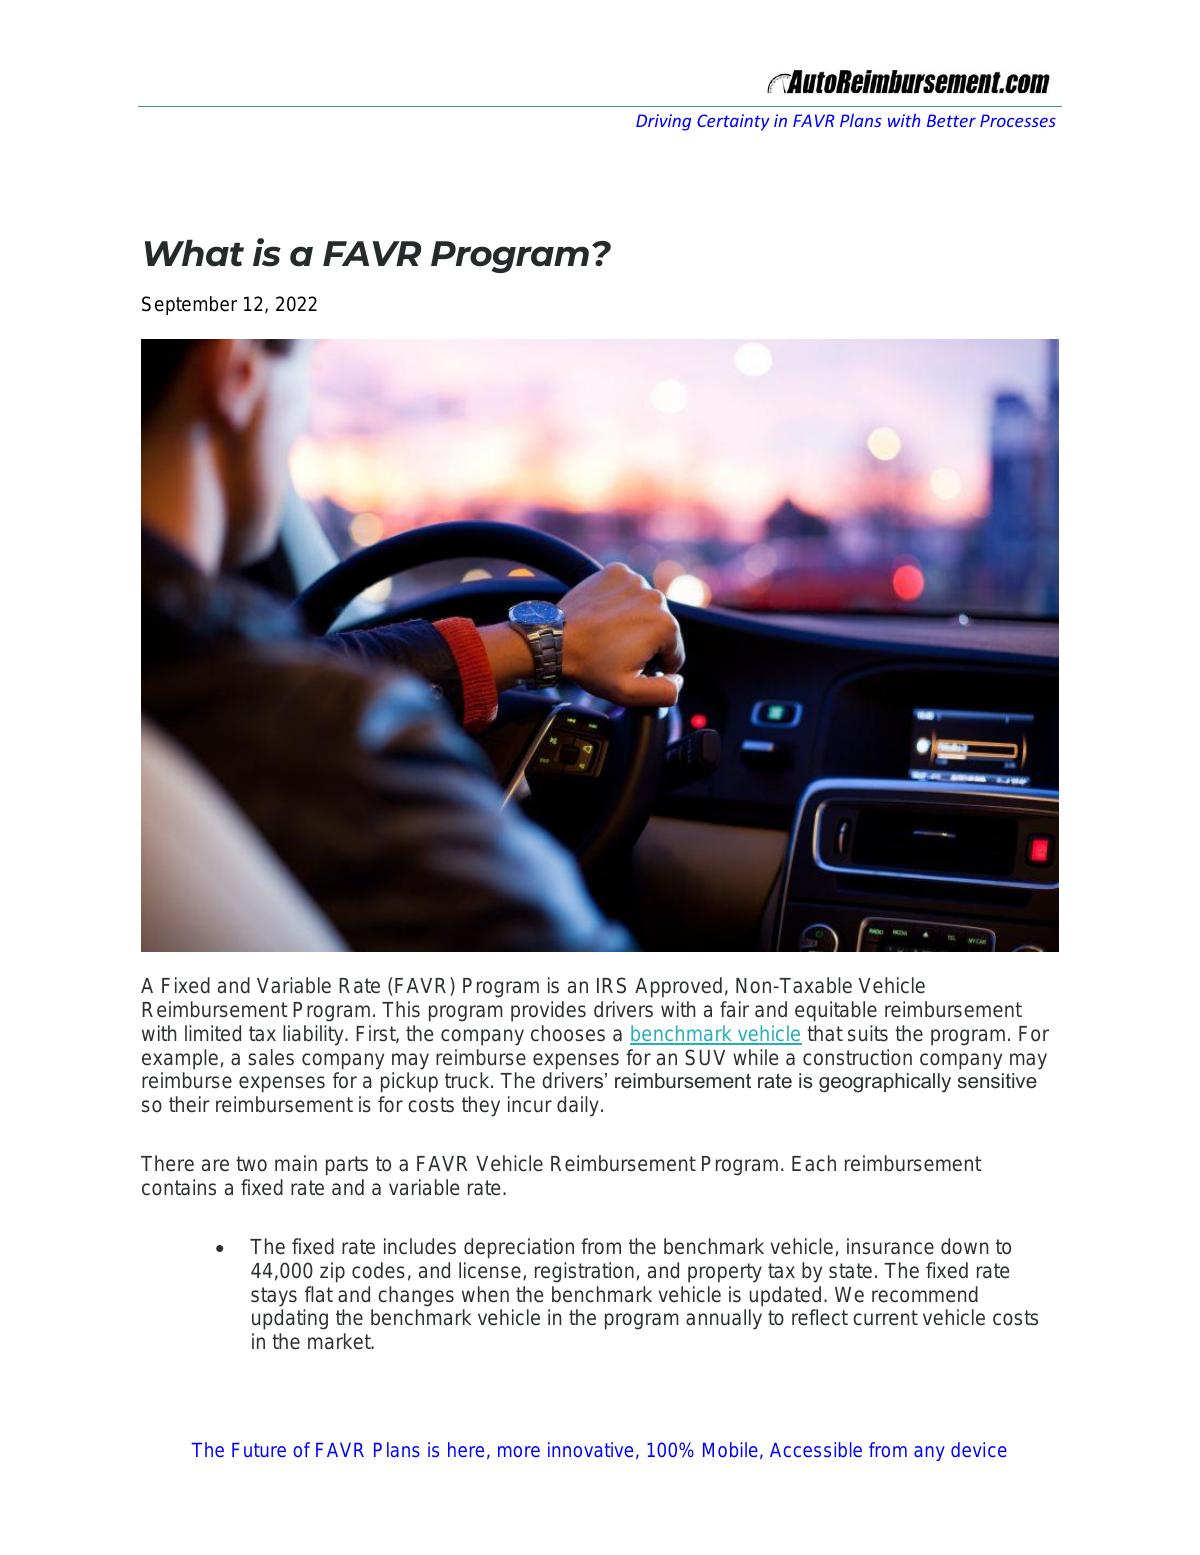 What is a FAVR Vehicle Reimbursement Program? 